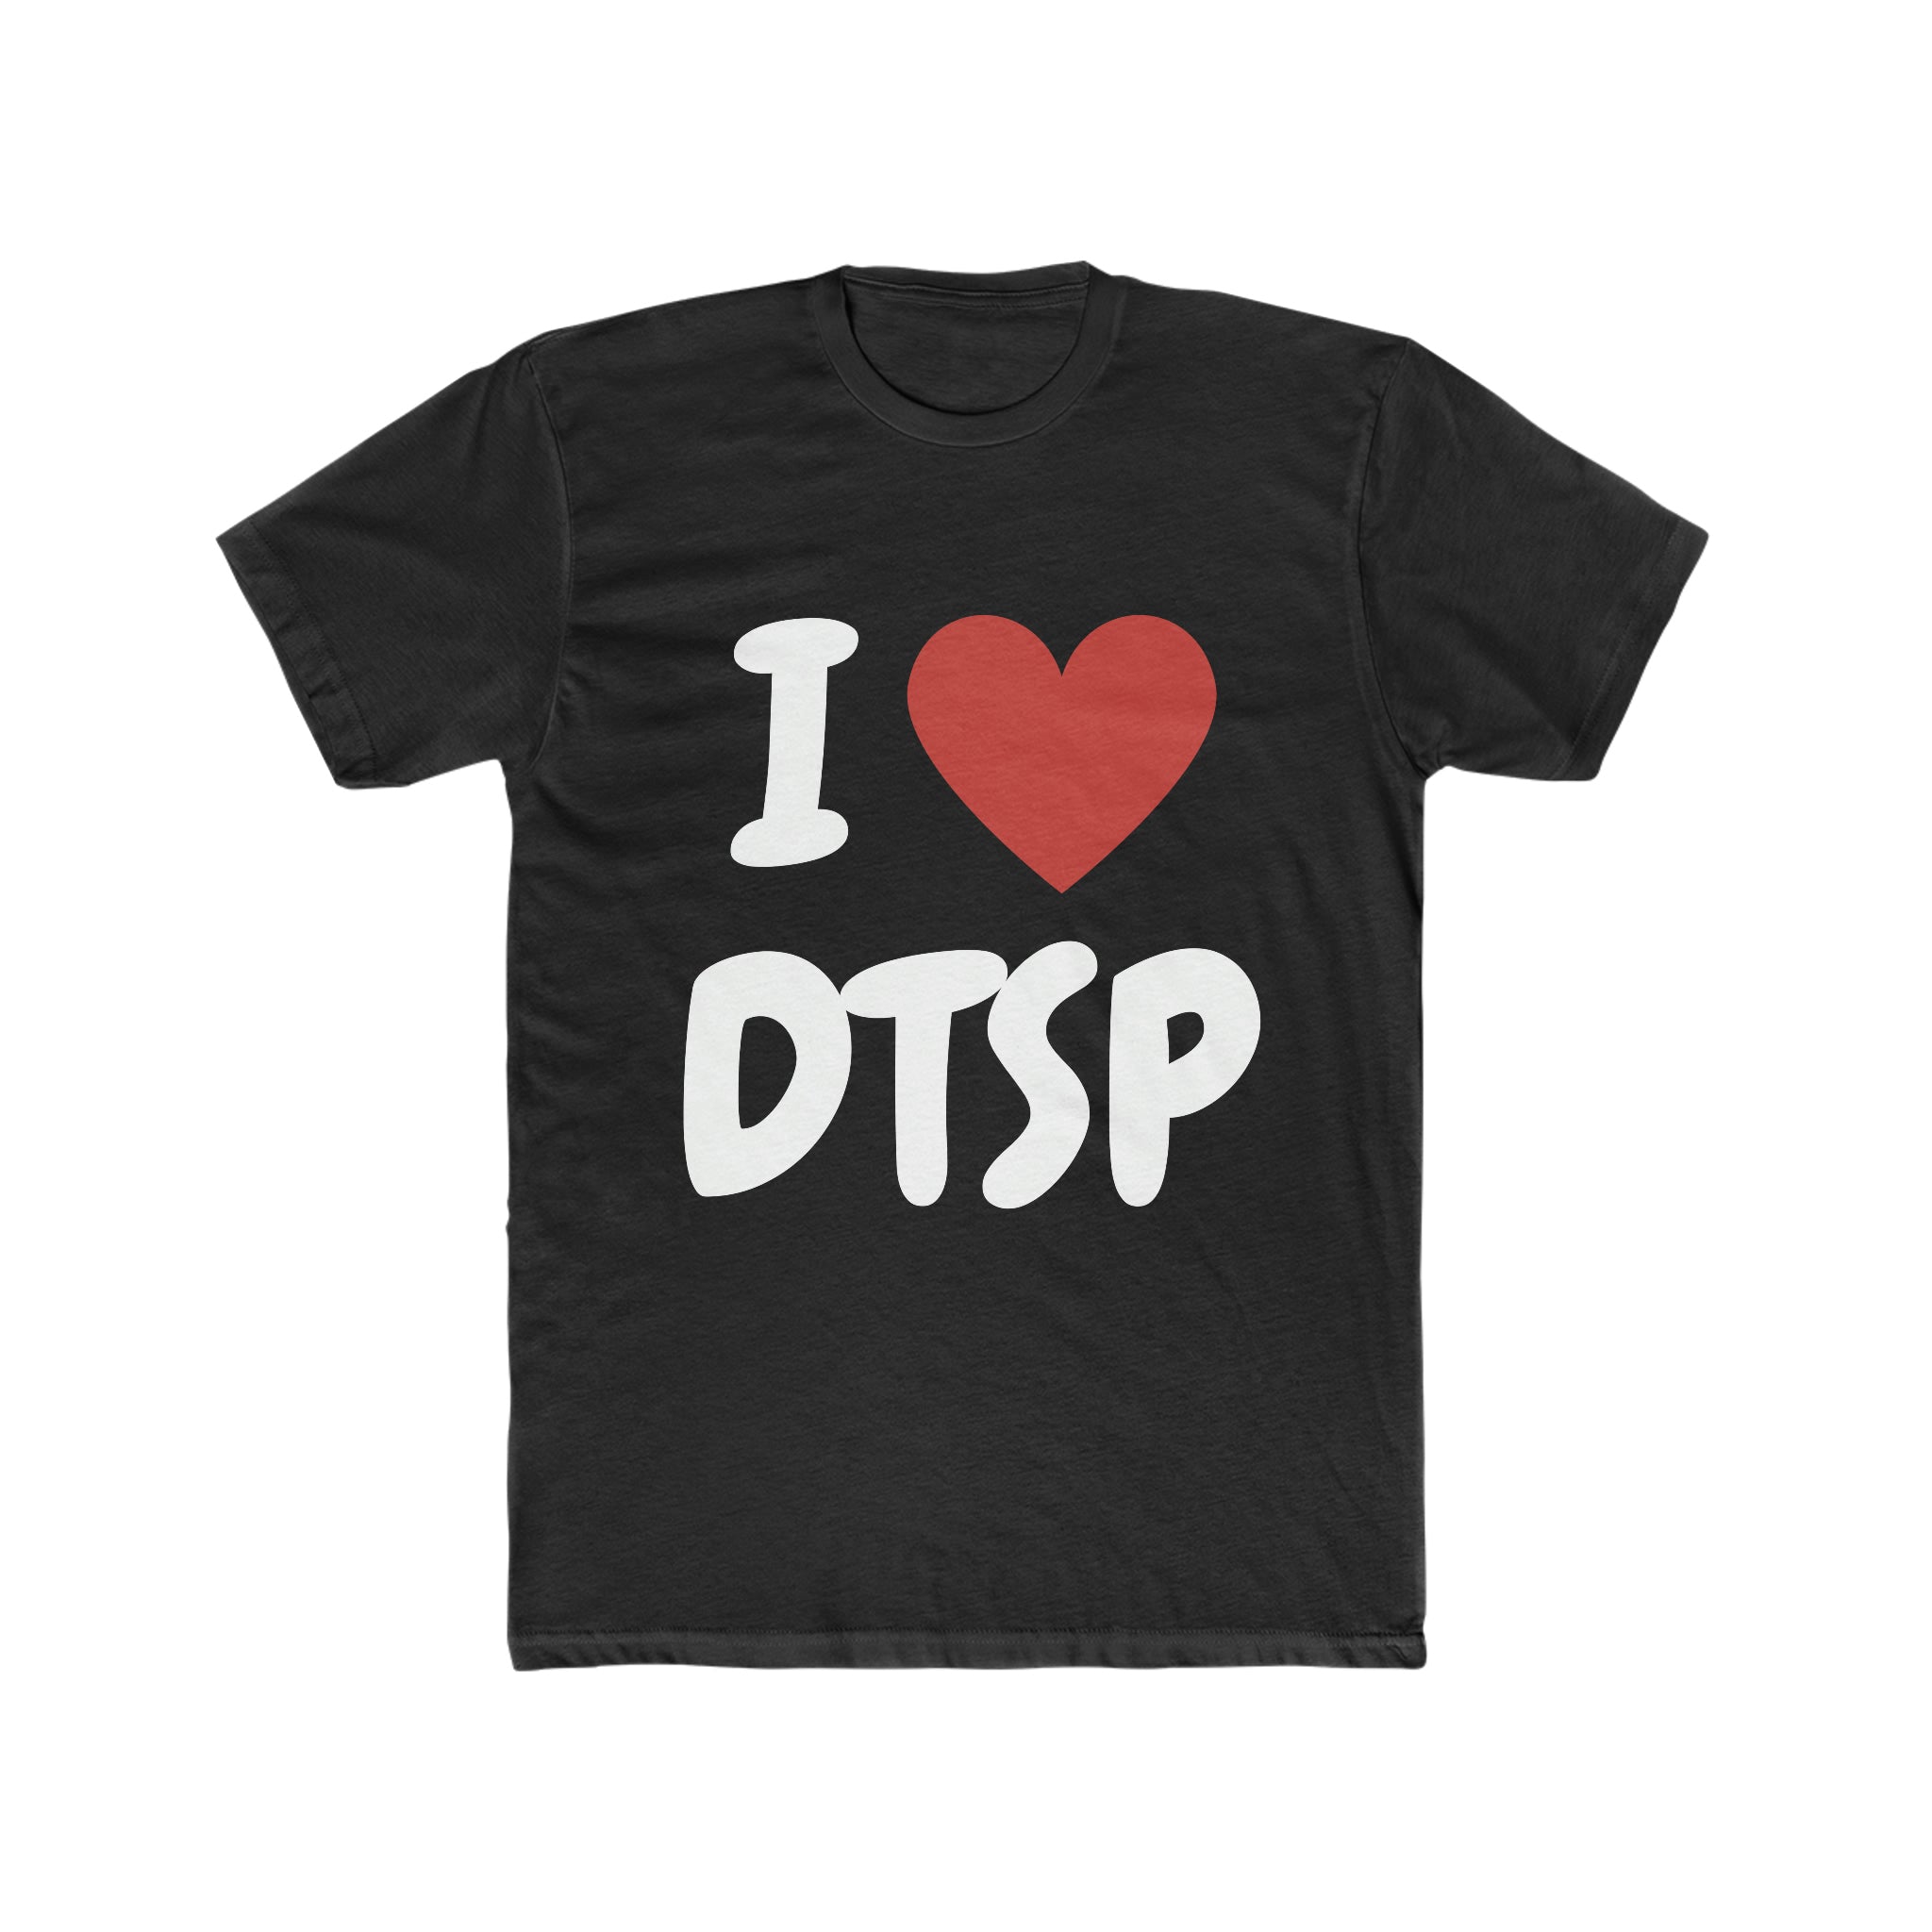 "DTSP" Tee